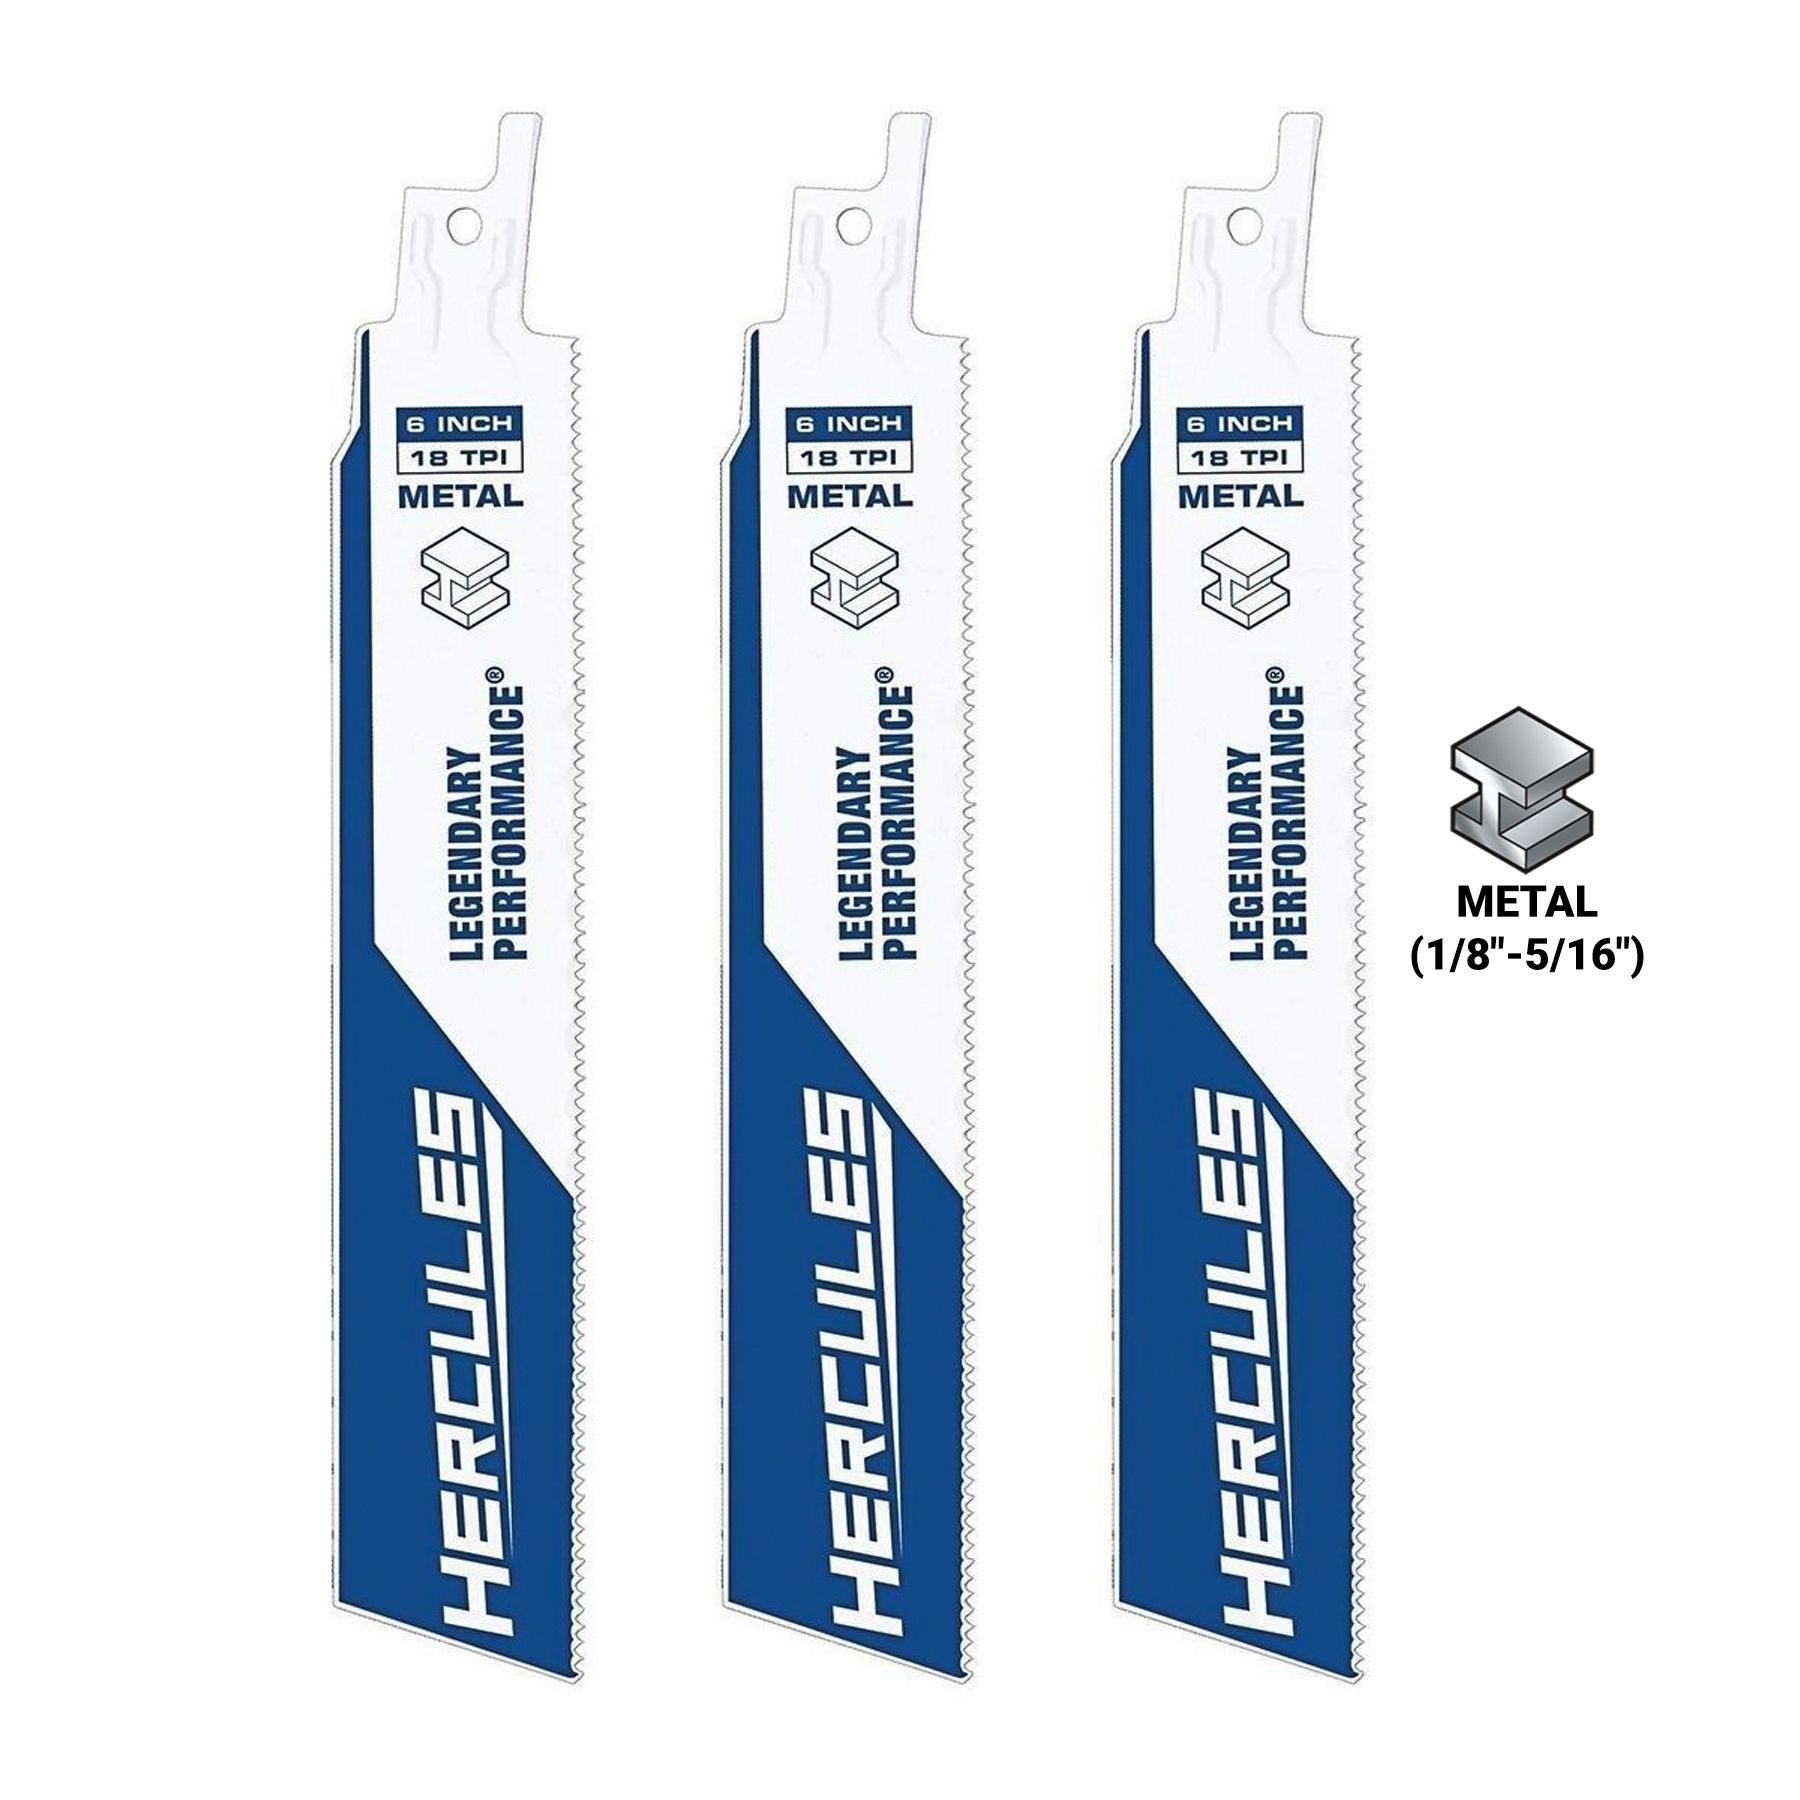 HERCULES 6 in. 18 TPI Bi-Metal Reciprocating Saw Blades, 3 Pack